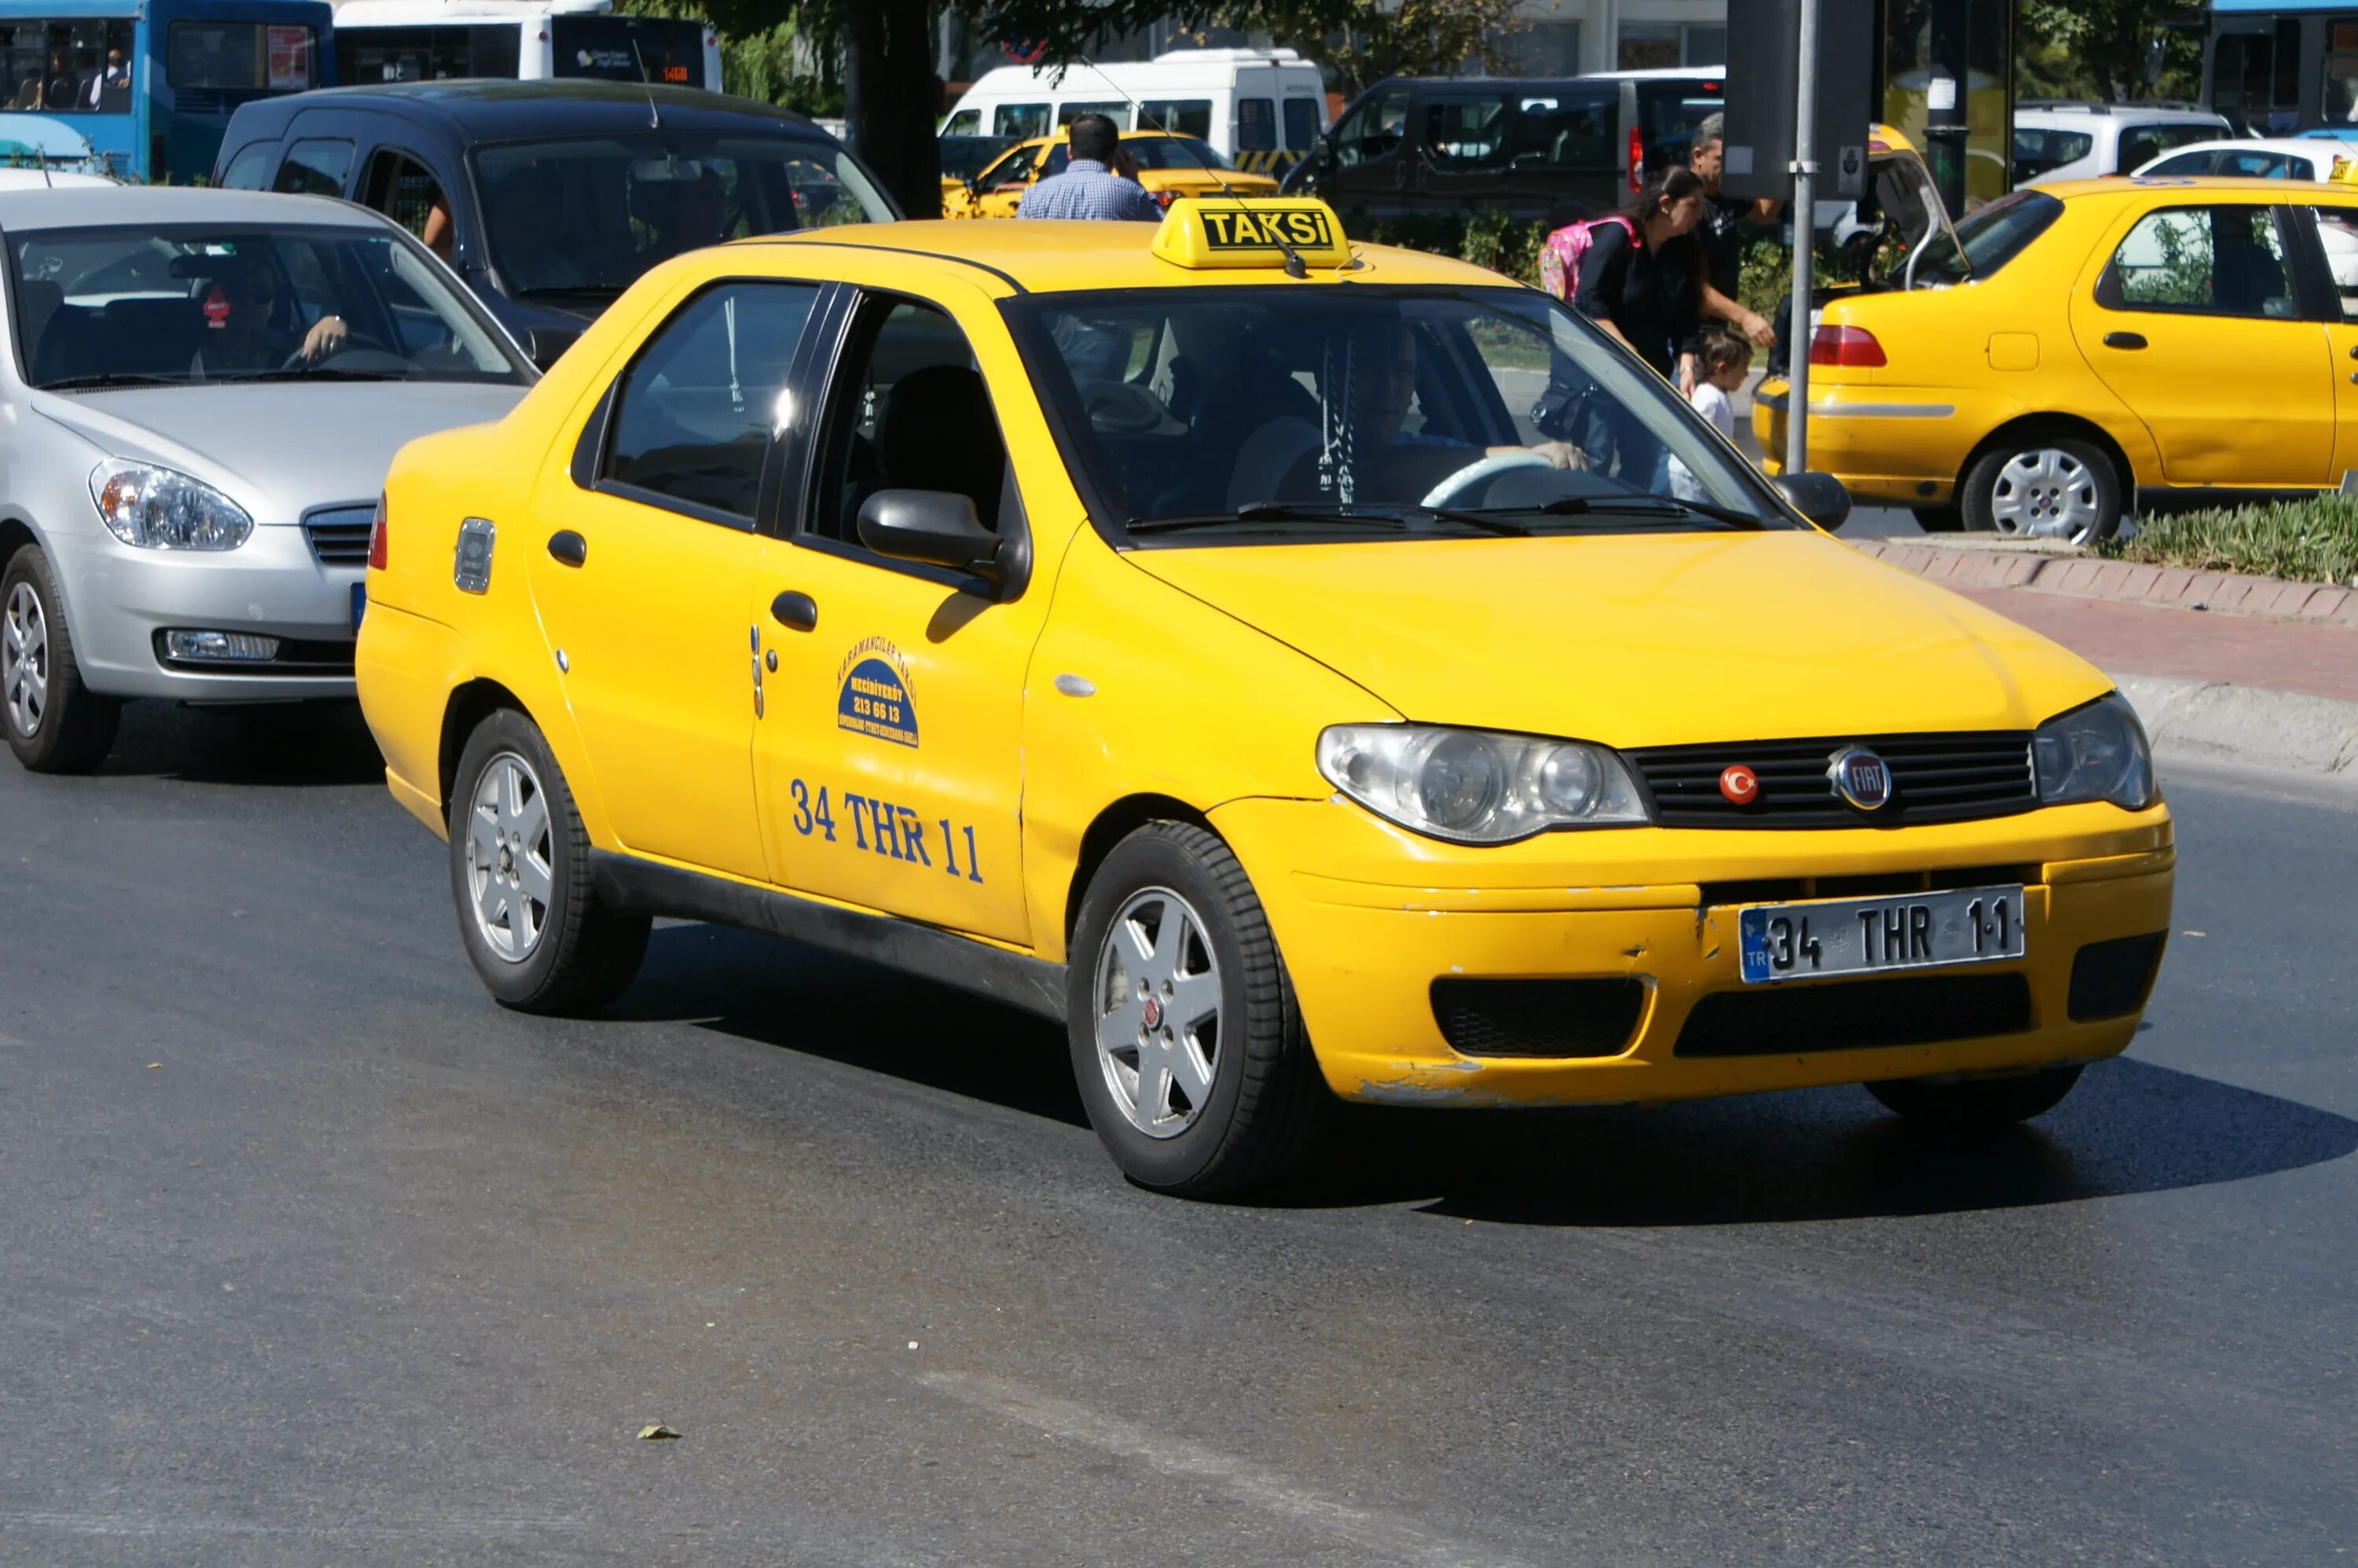 Фиат Альбеа такси. Fiat 1t Taxi. Такси в Стамбуле. Такси Фиат в Стамбуле.